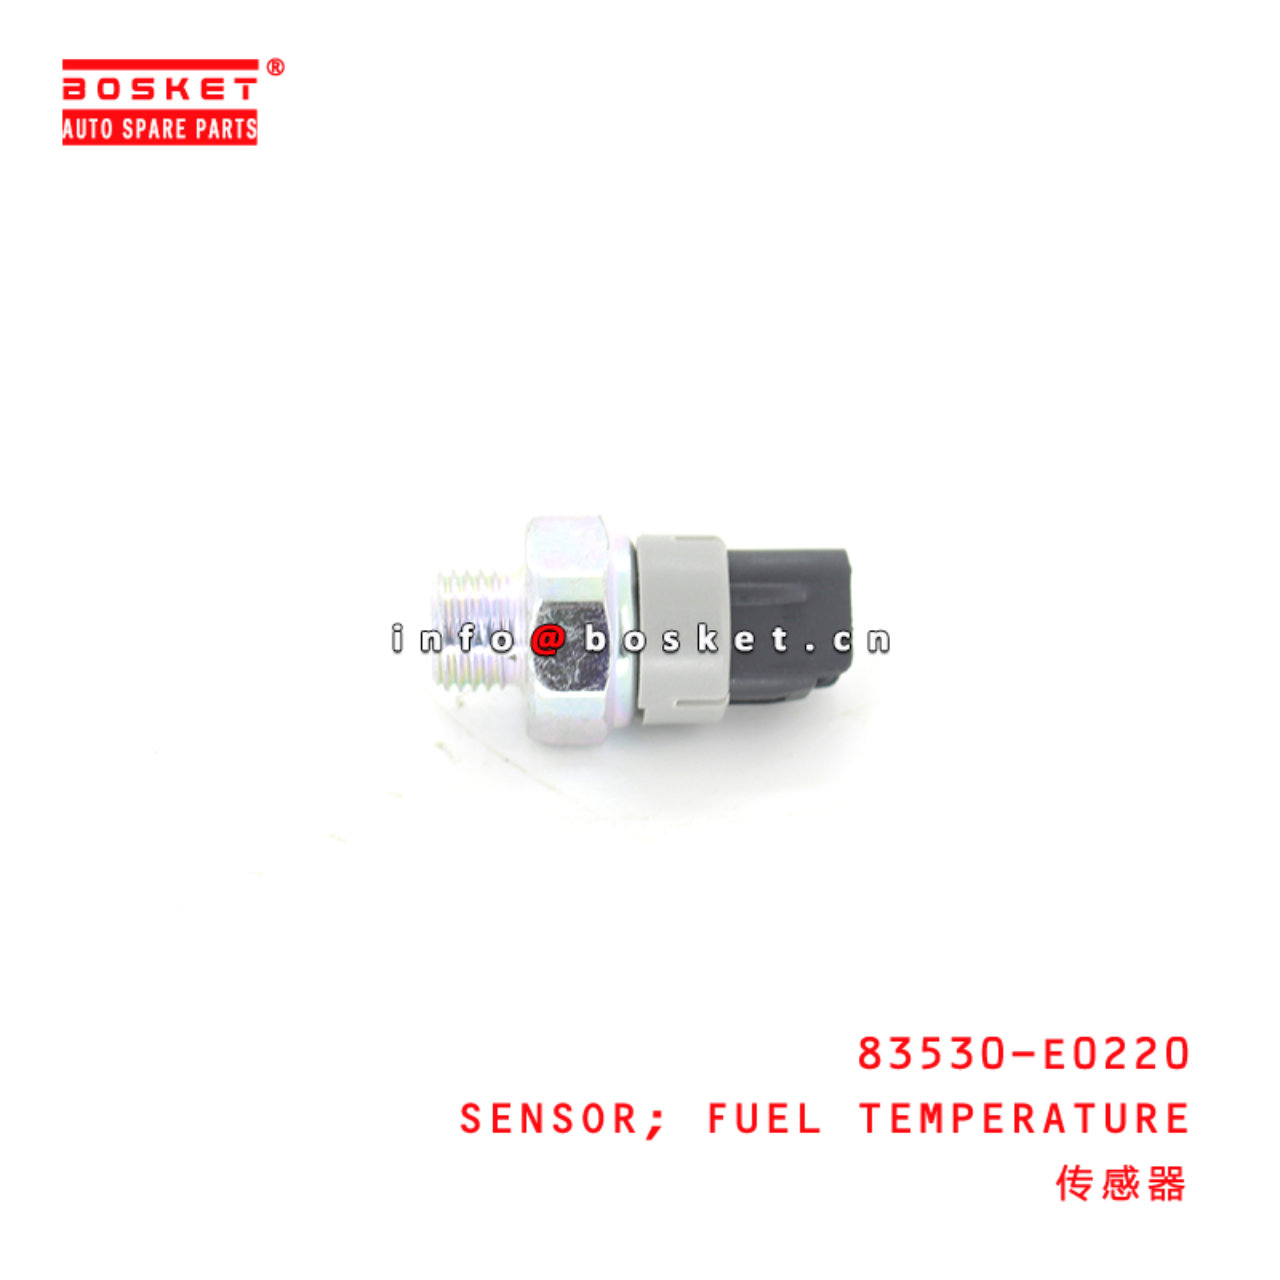 83530-E0220 Fuel Temperature Sensor Suitable for ISUZU HINO